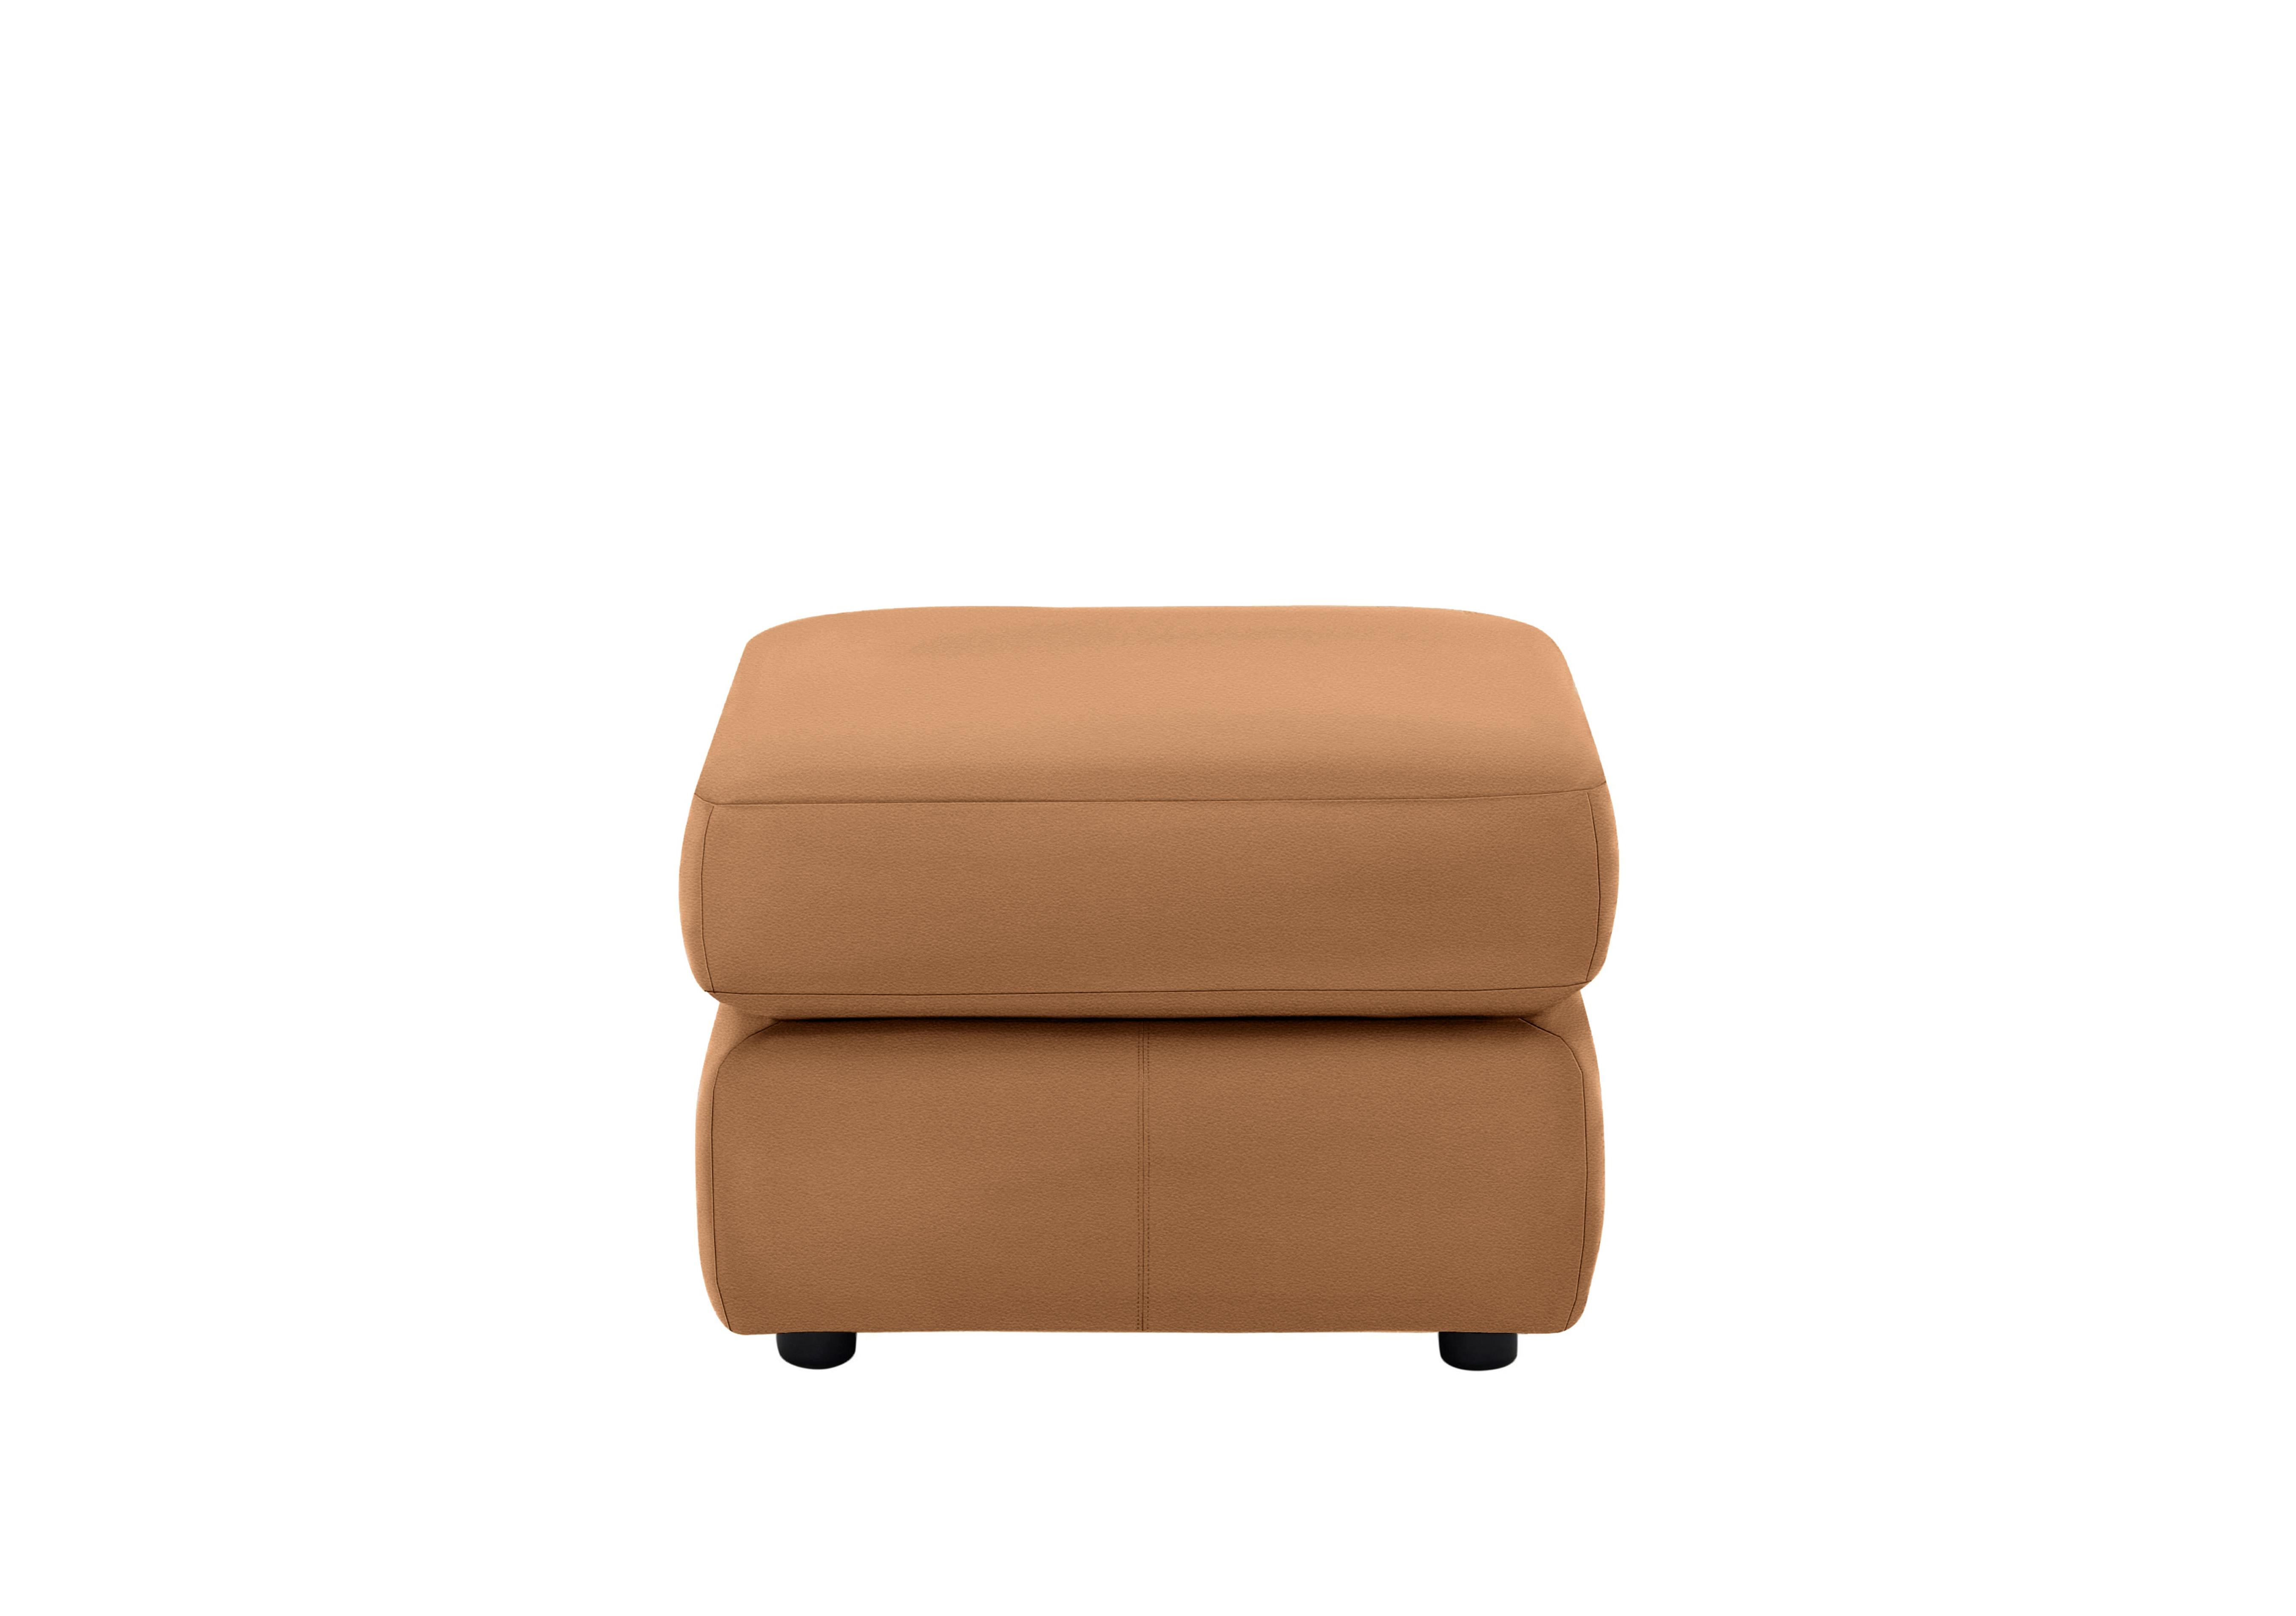 Avon Leather Footstool in L847 Cambridge Tan on Furniture Village